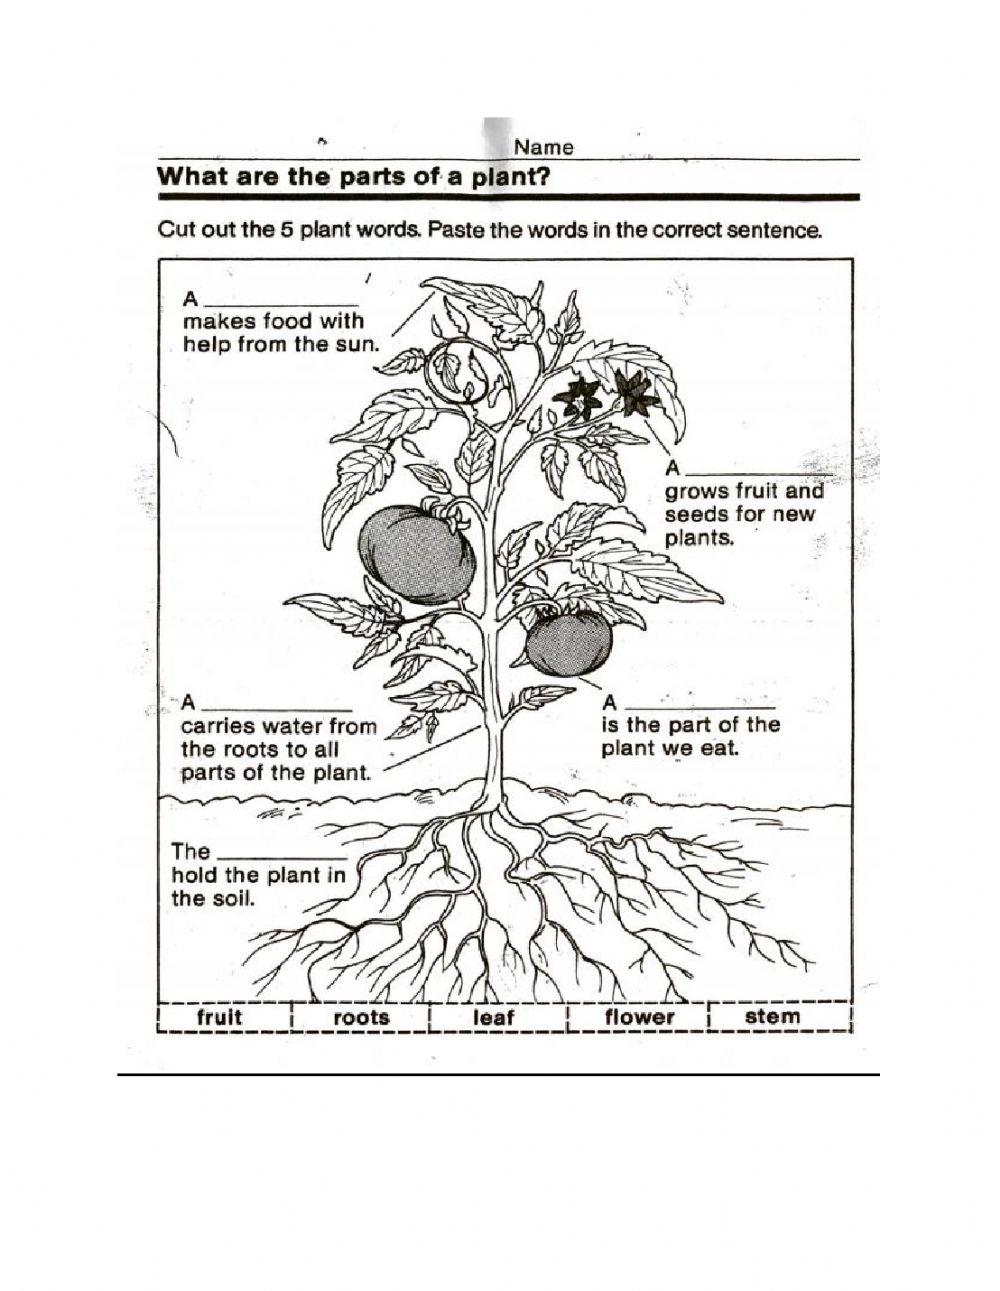 Importance of Plants